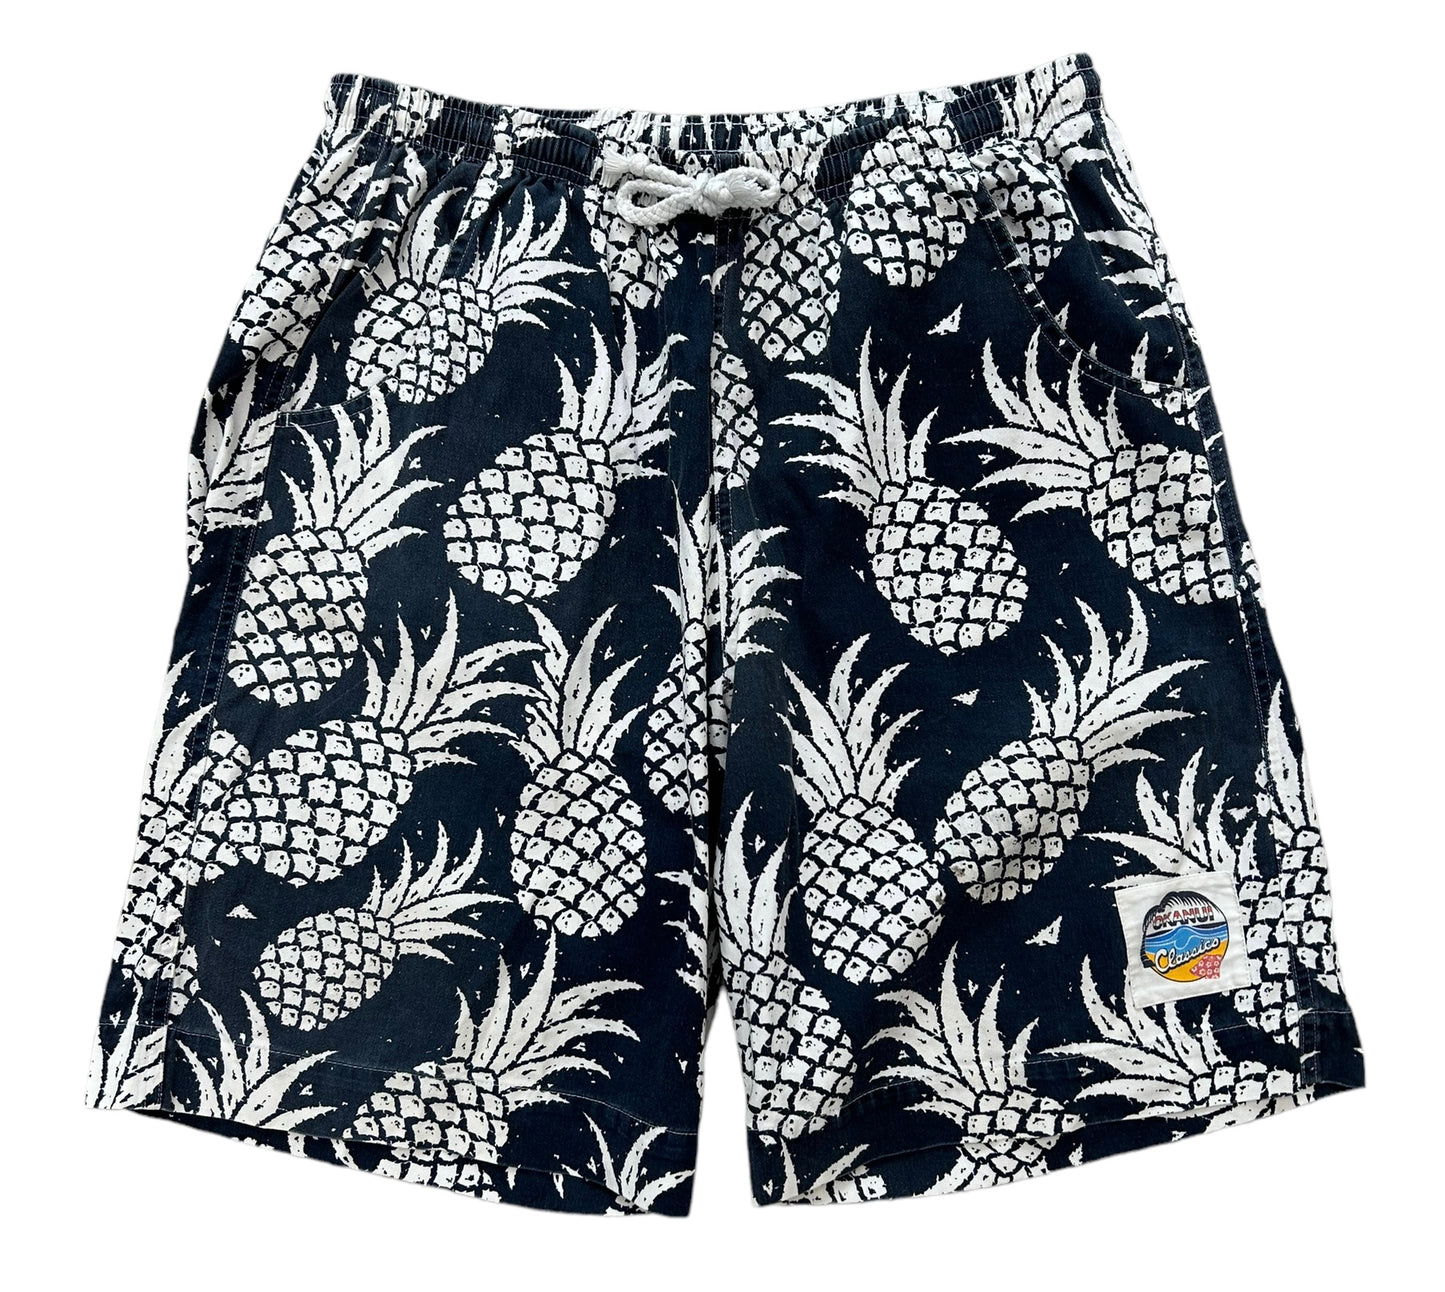 Okanui Shorts